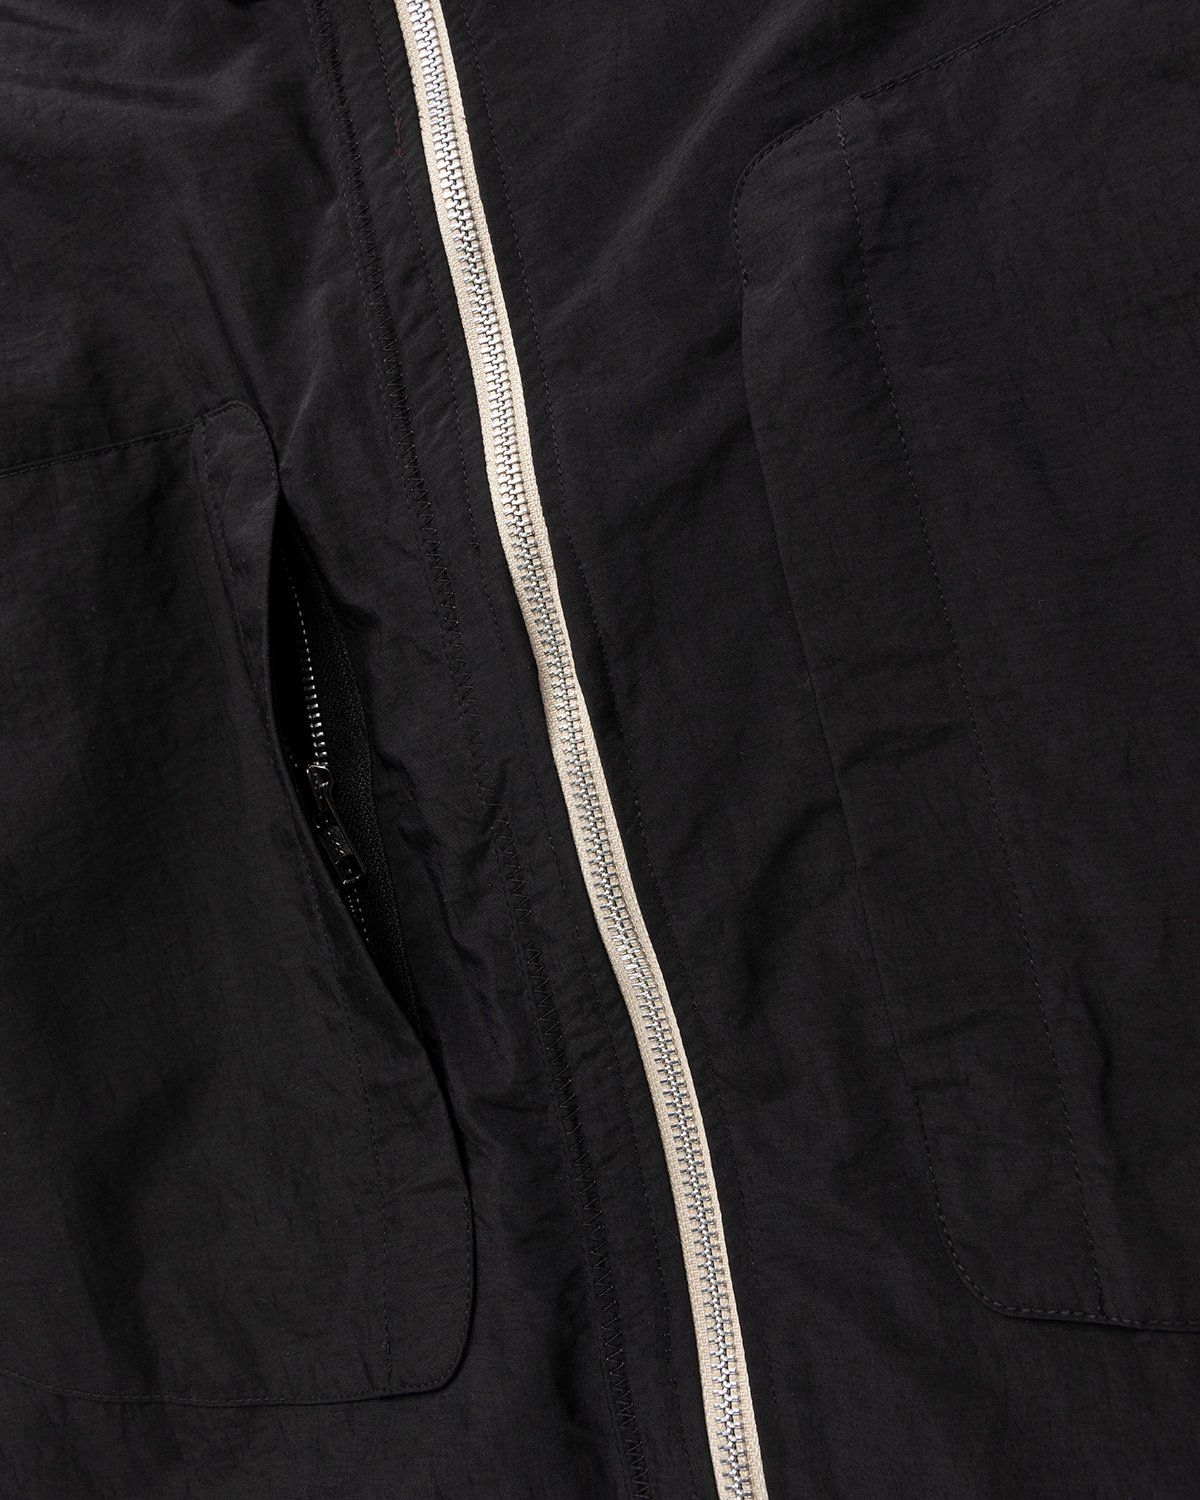 Arnar Mar Jonsson – Texlon Composition Outerwear Jacket Beige Chocolate Black - Outerwear - Black - Image 8